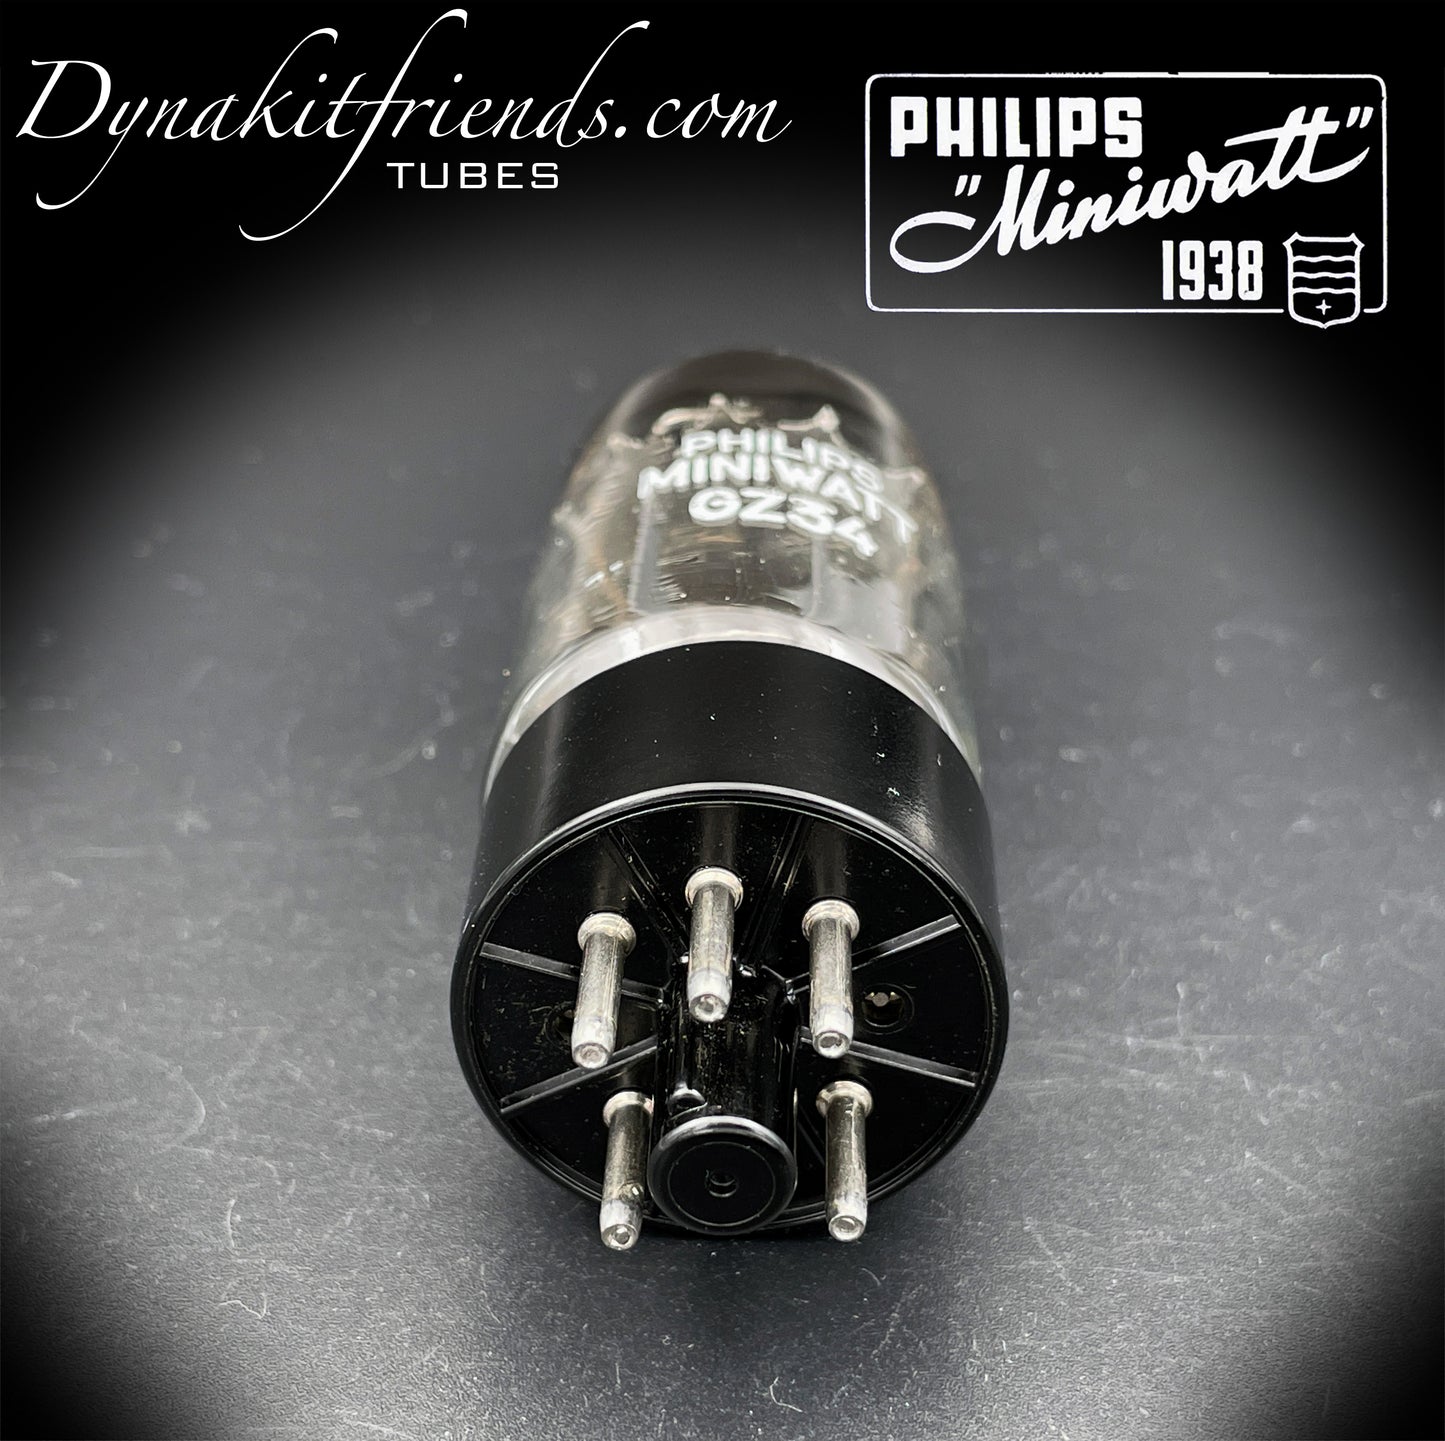 GZ34 ( 5AR4 ) PHILIPS Miniwatt f33 Rectificador de tubo getter doble D Fabricado en Bélgica